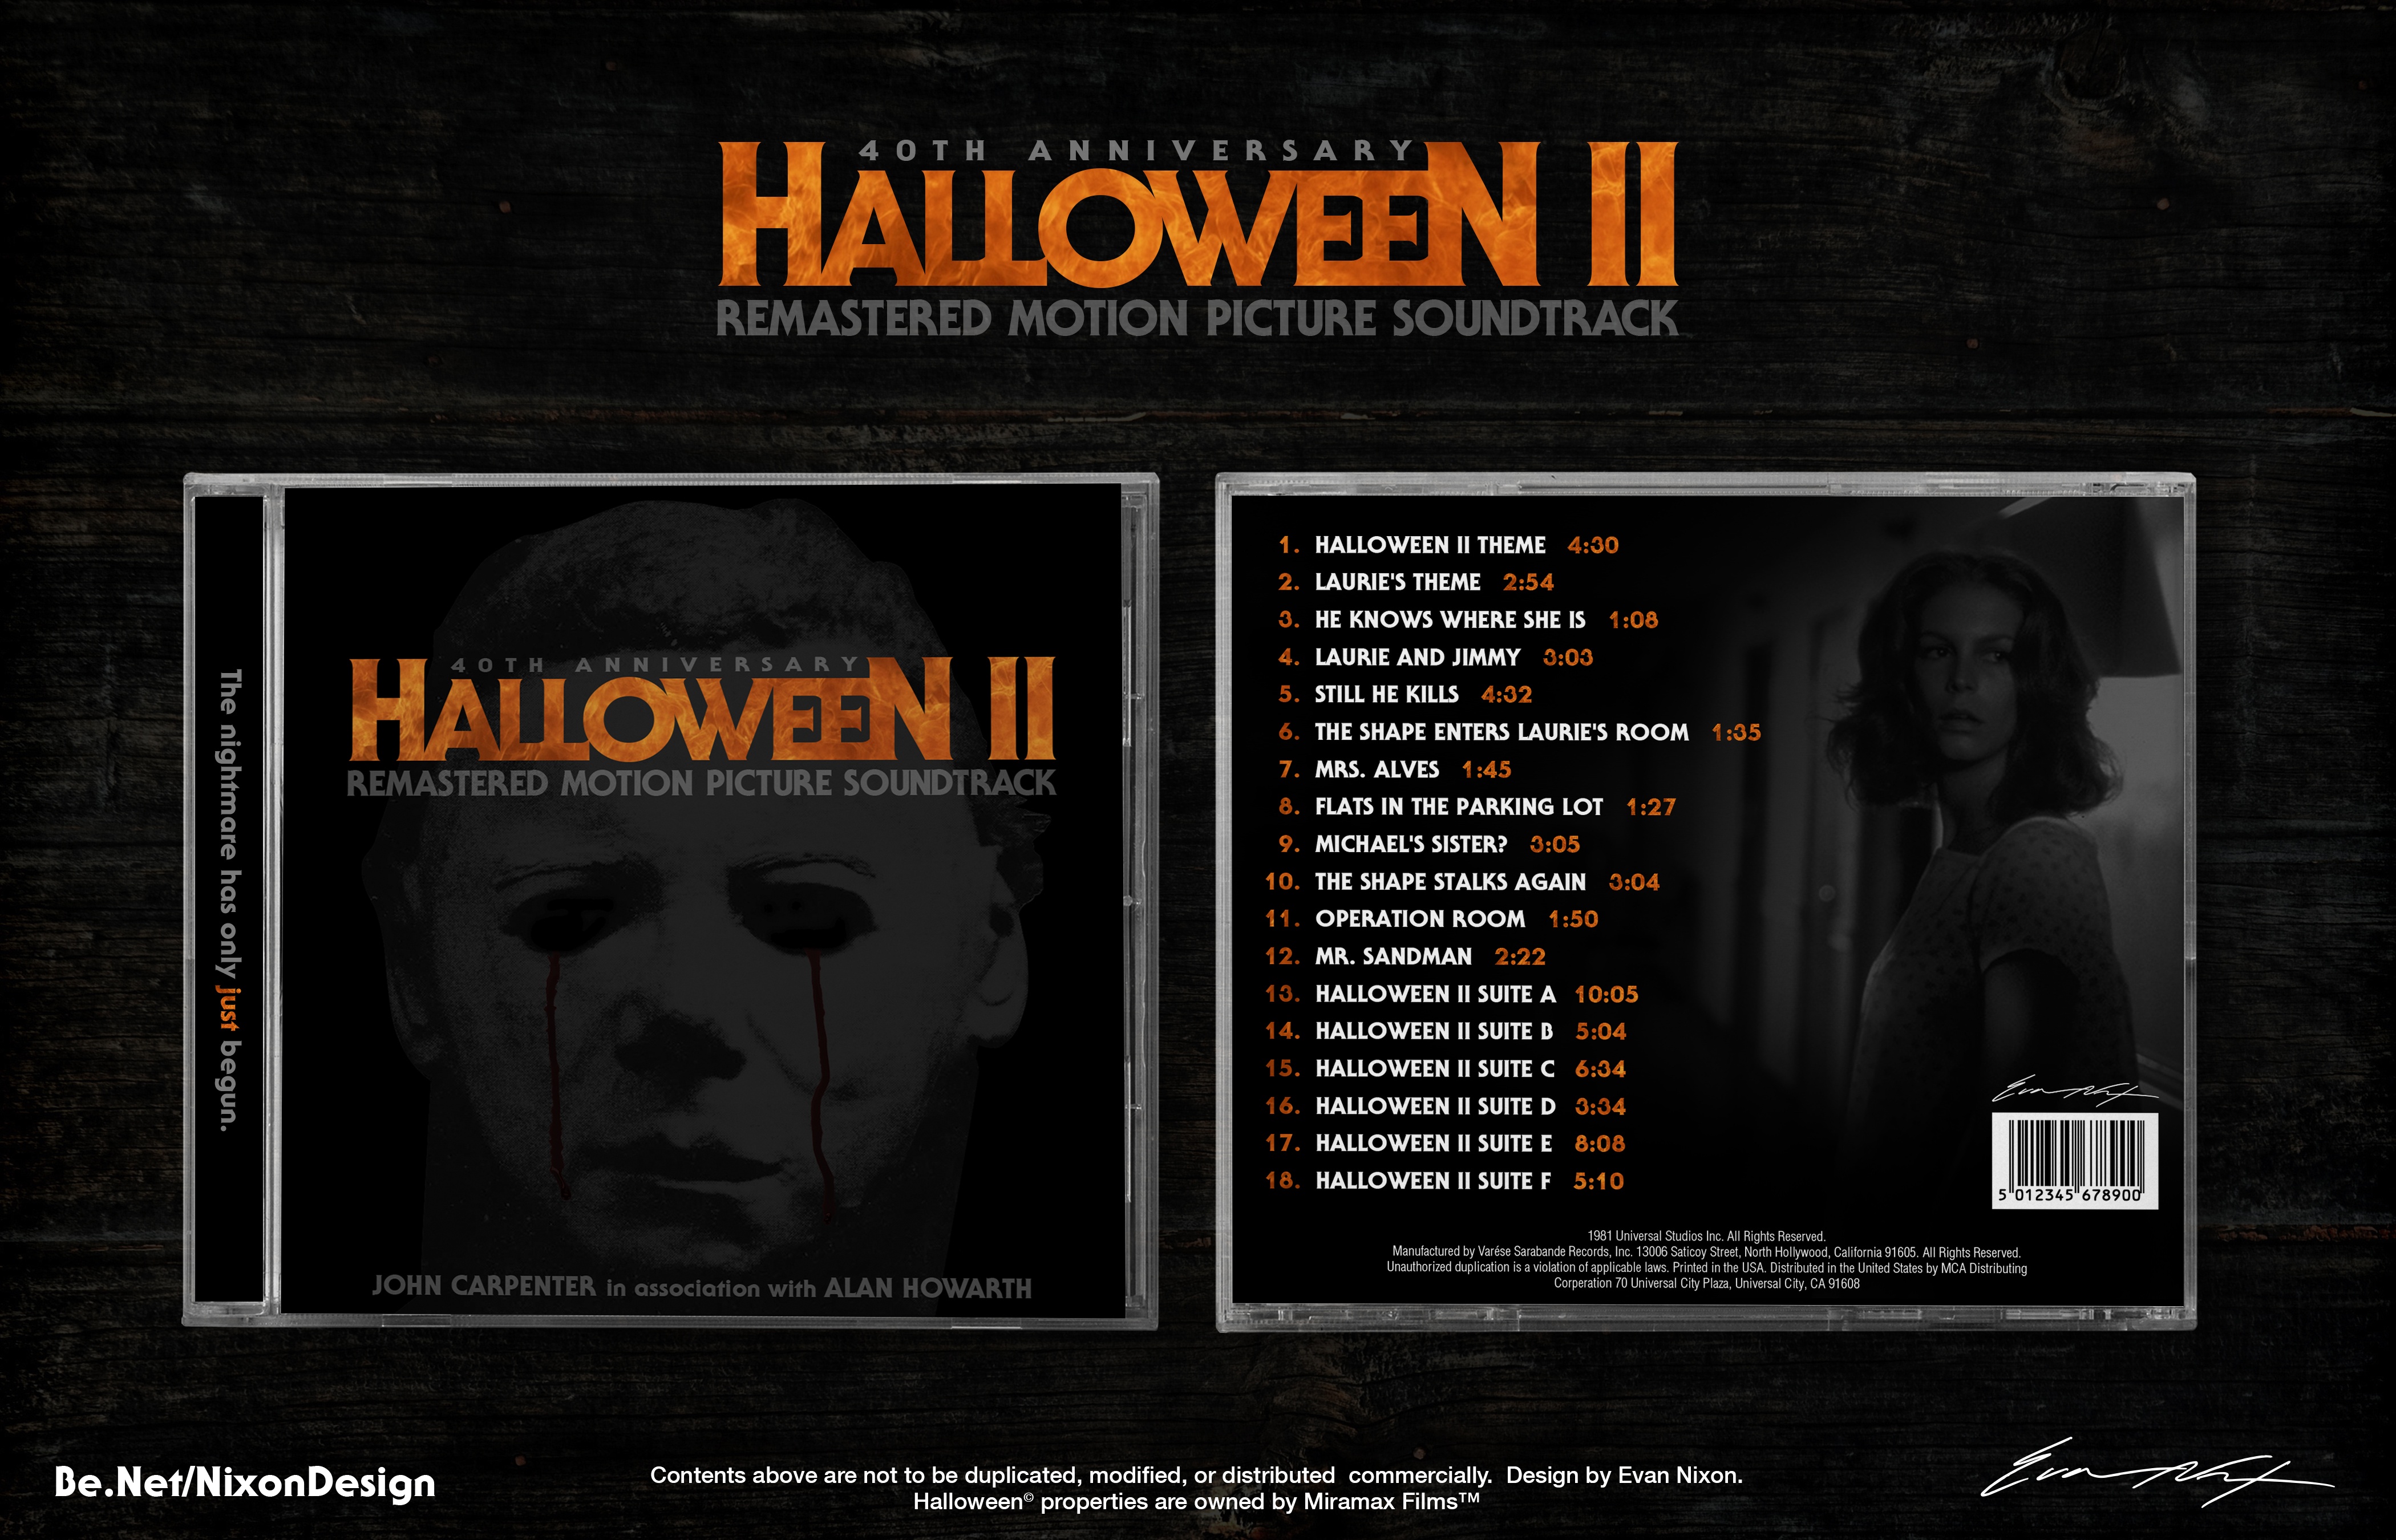 Halloween 2 | 40th Anniversary Soundtrack box cover